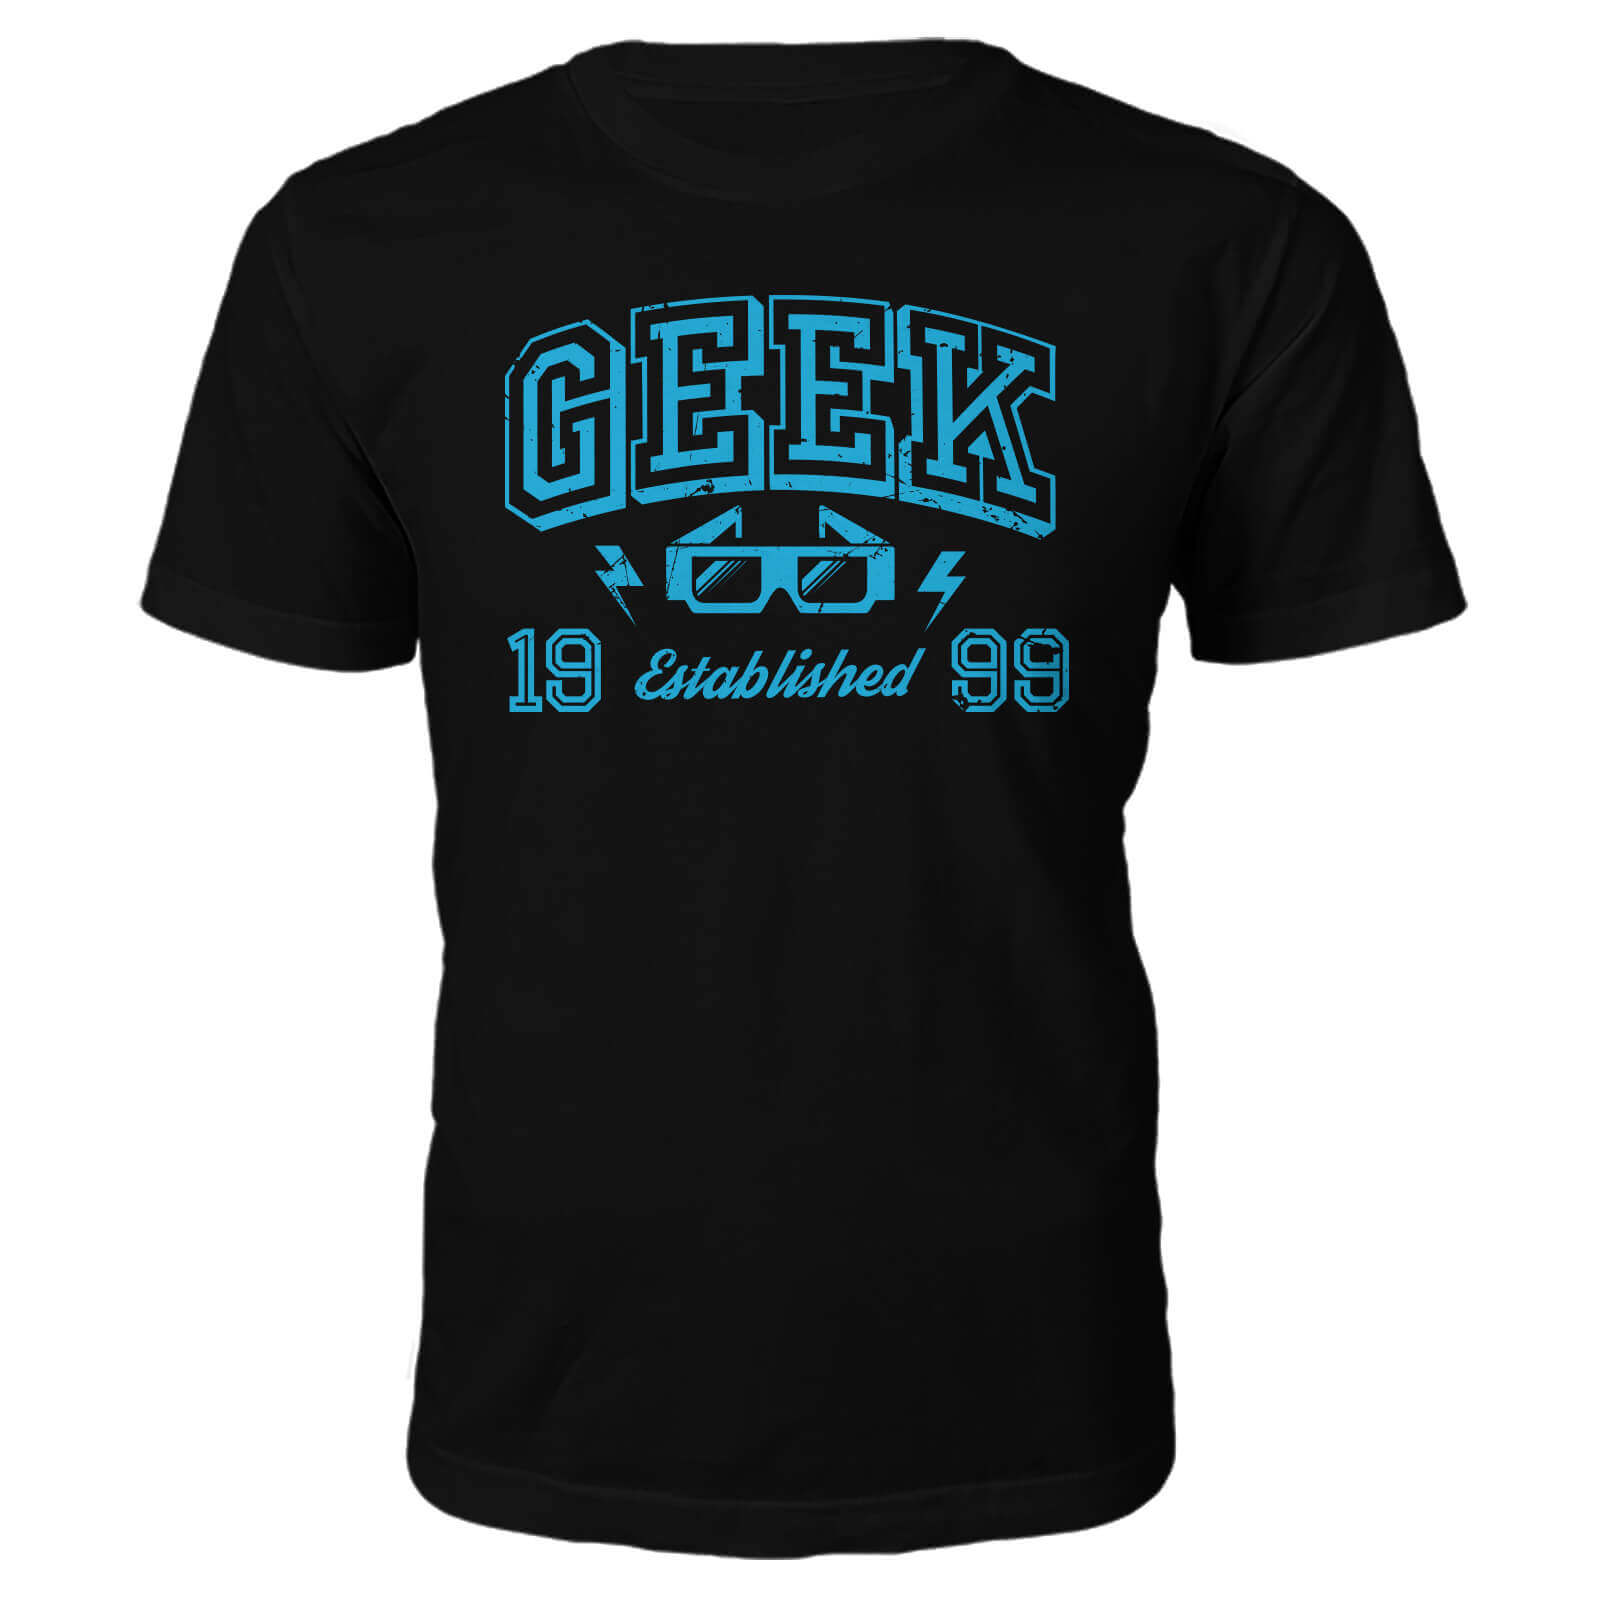 Geek Established 1990's T-Shirt- Black - XXL - 1999